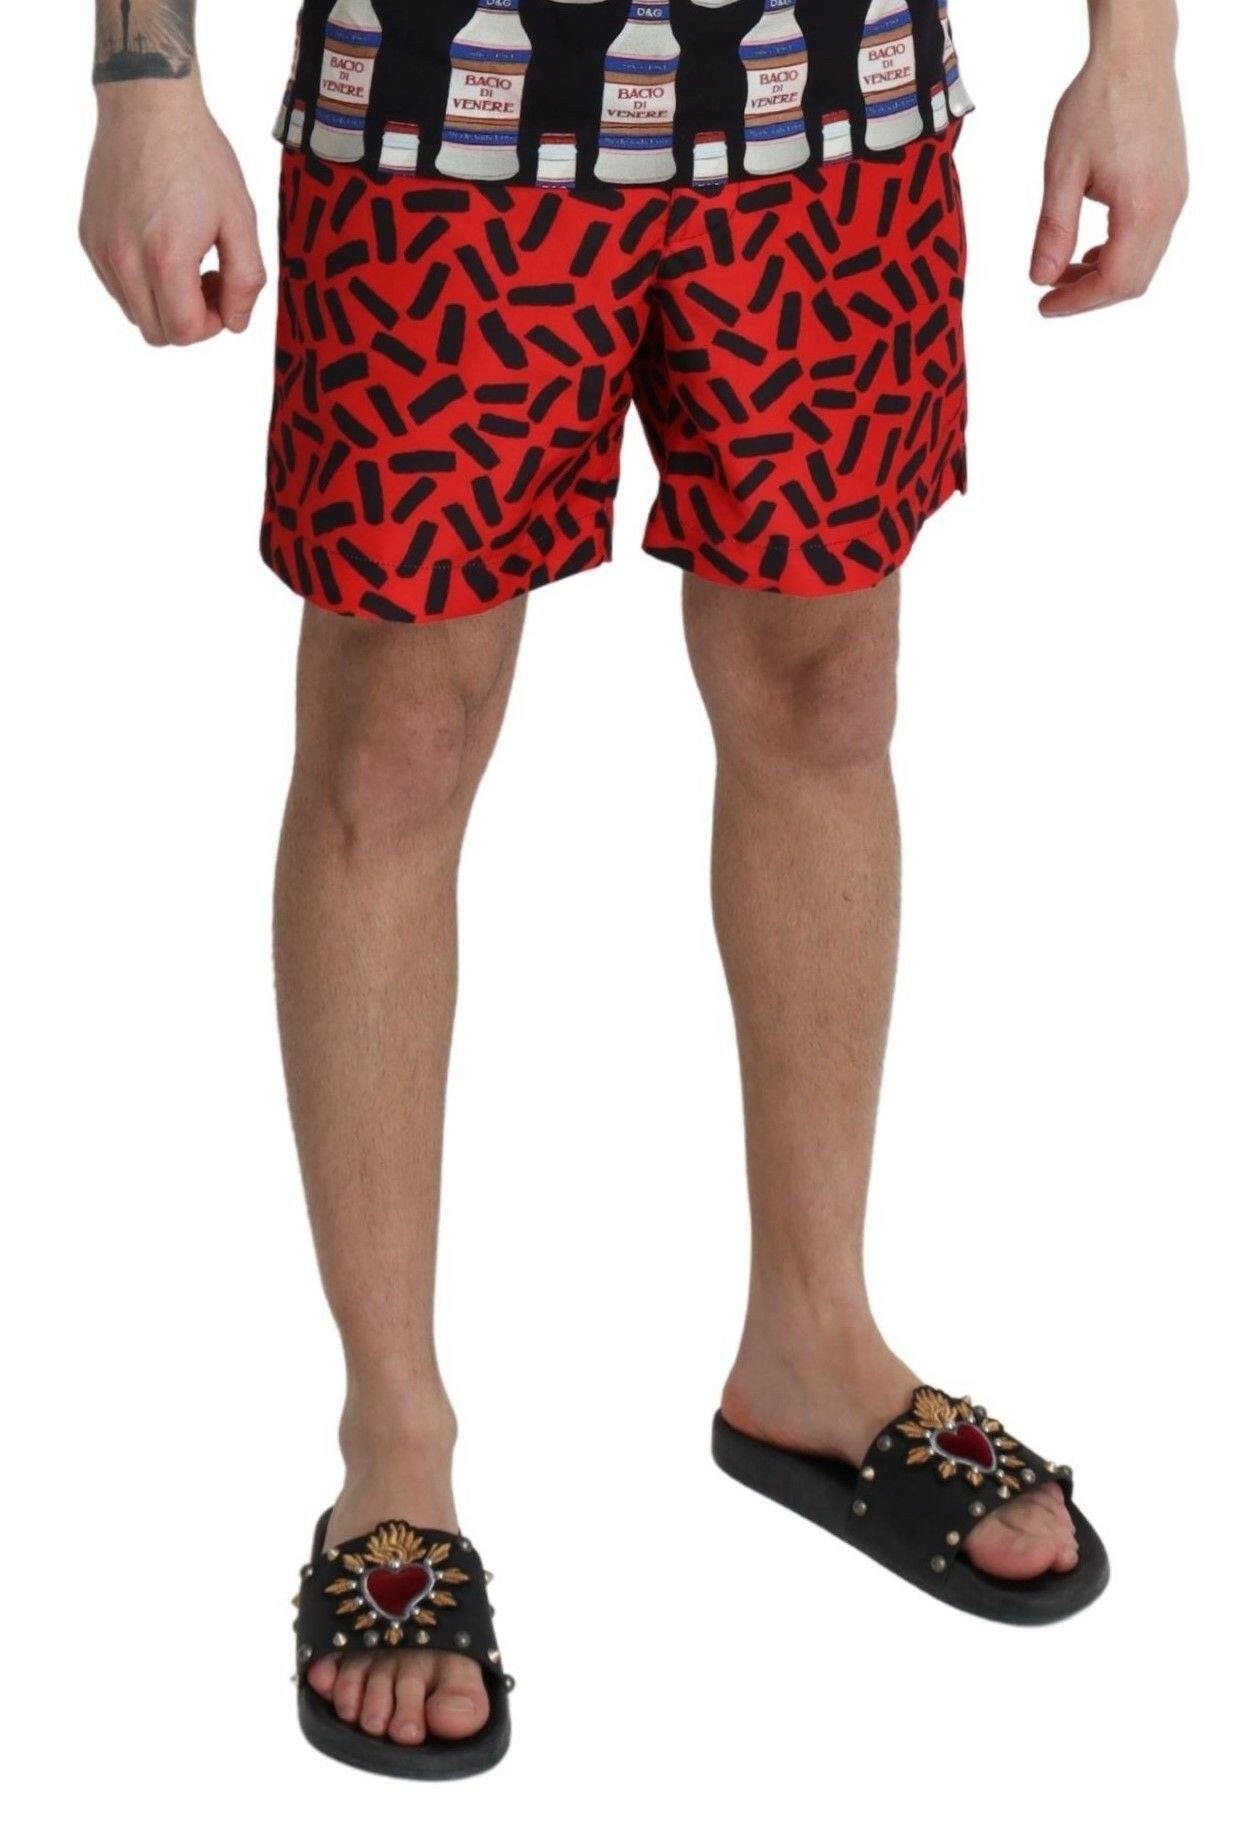 Dolce & Gabbana Red Patterned Beachwear Shorts Swimwear - GENUINE AUTHENTIC BRAND LLC  